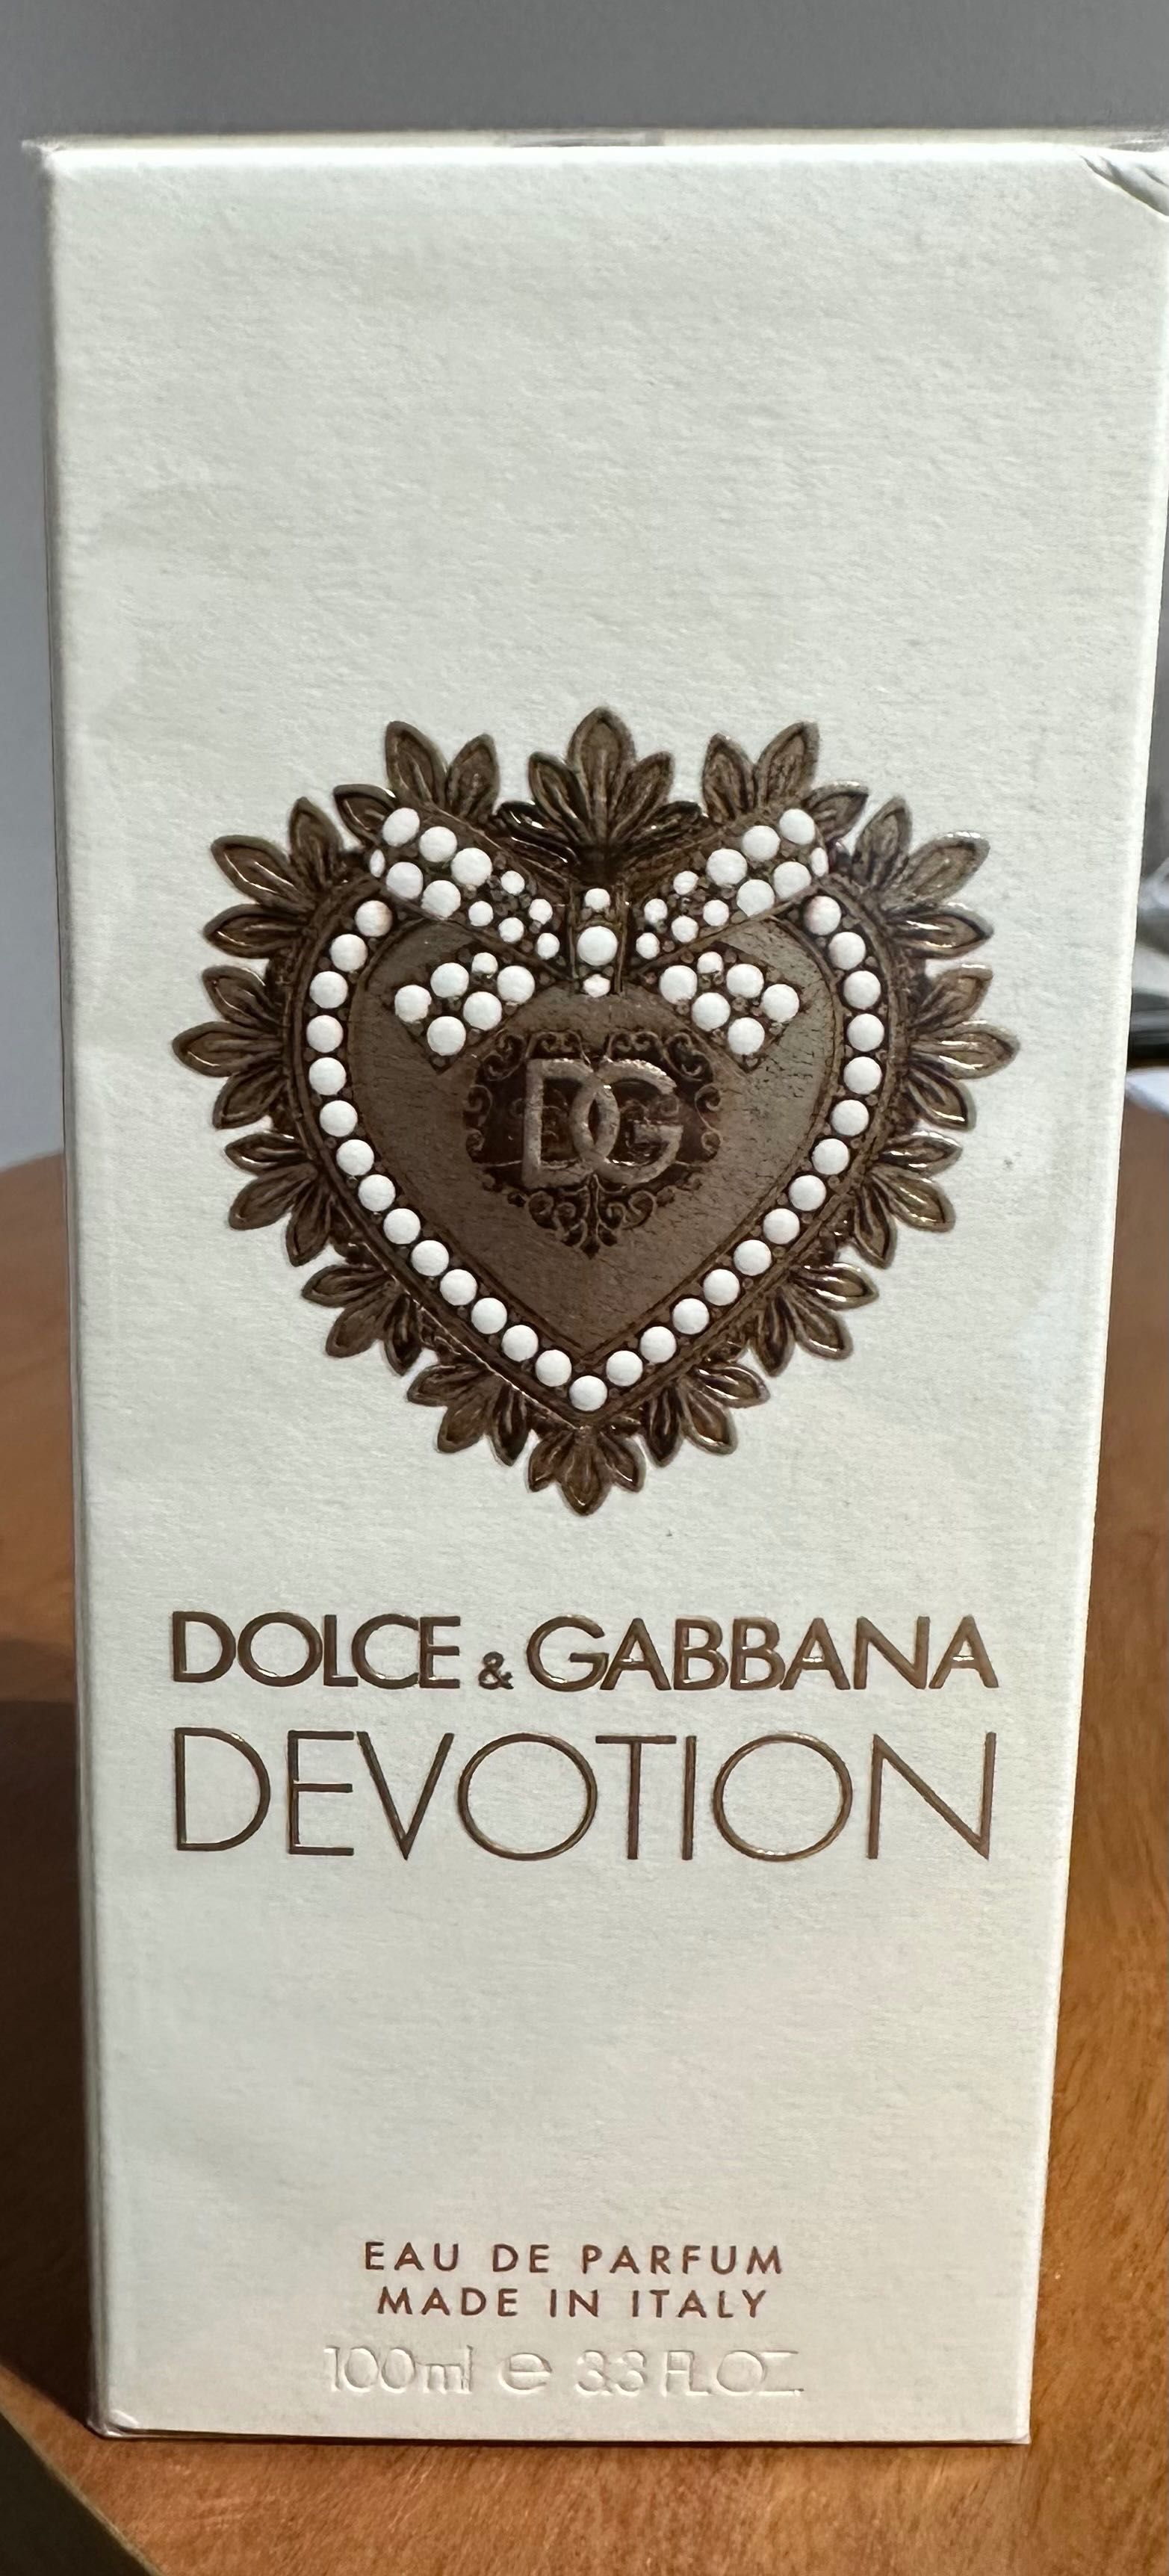 Dolce & Gabbana Devotion 100 ml.